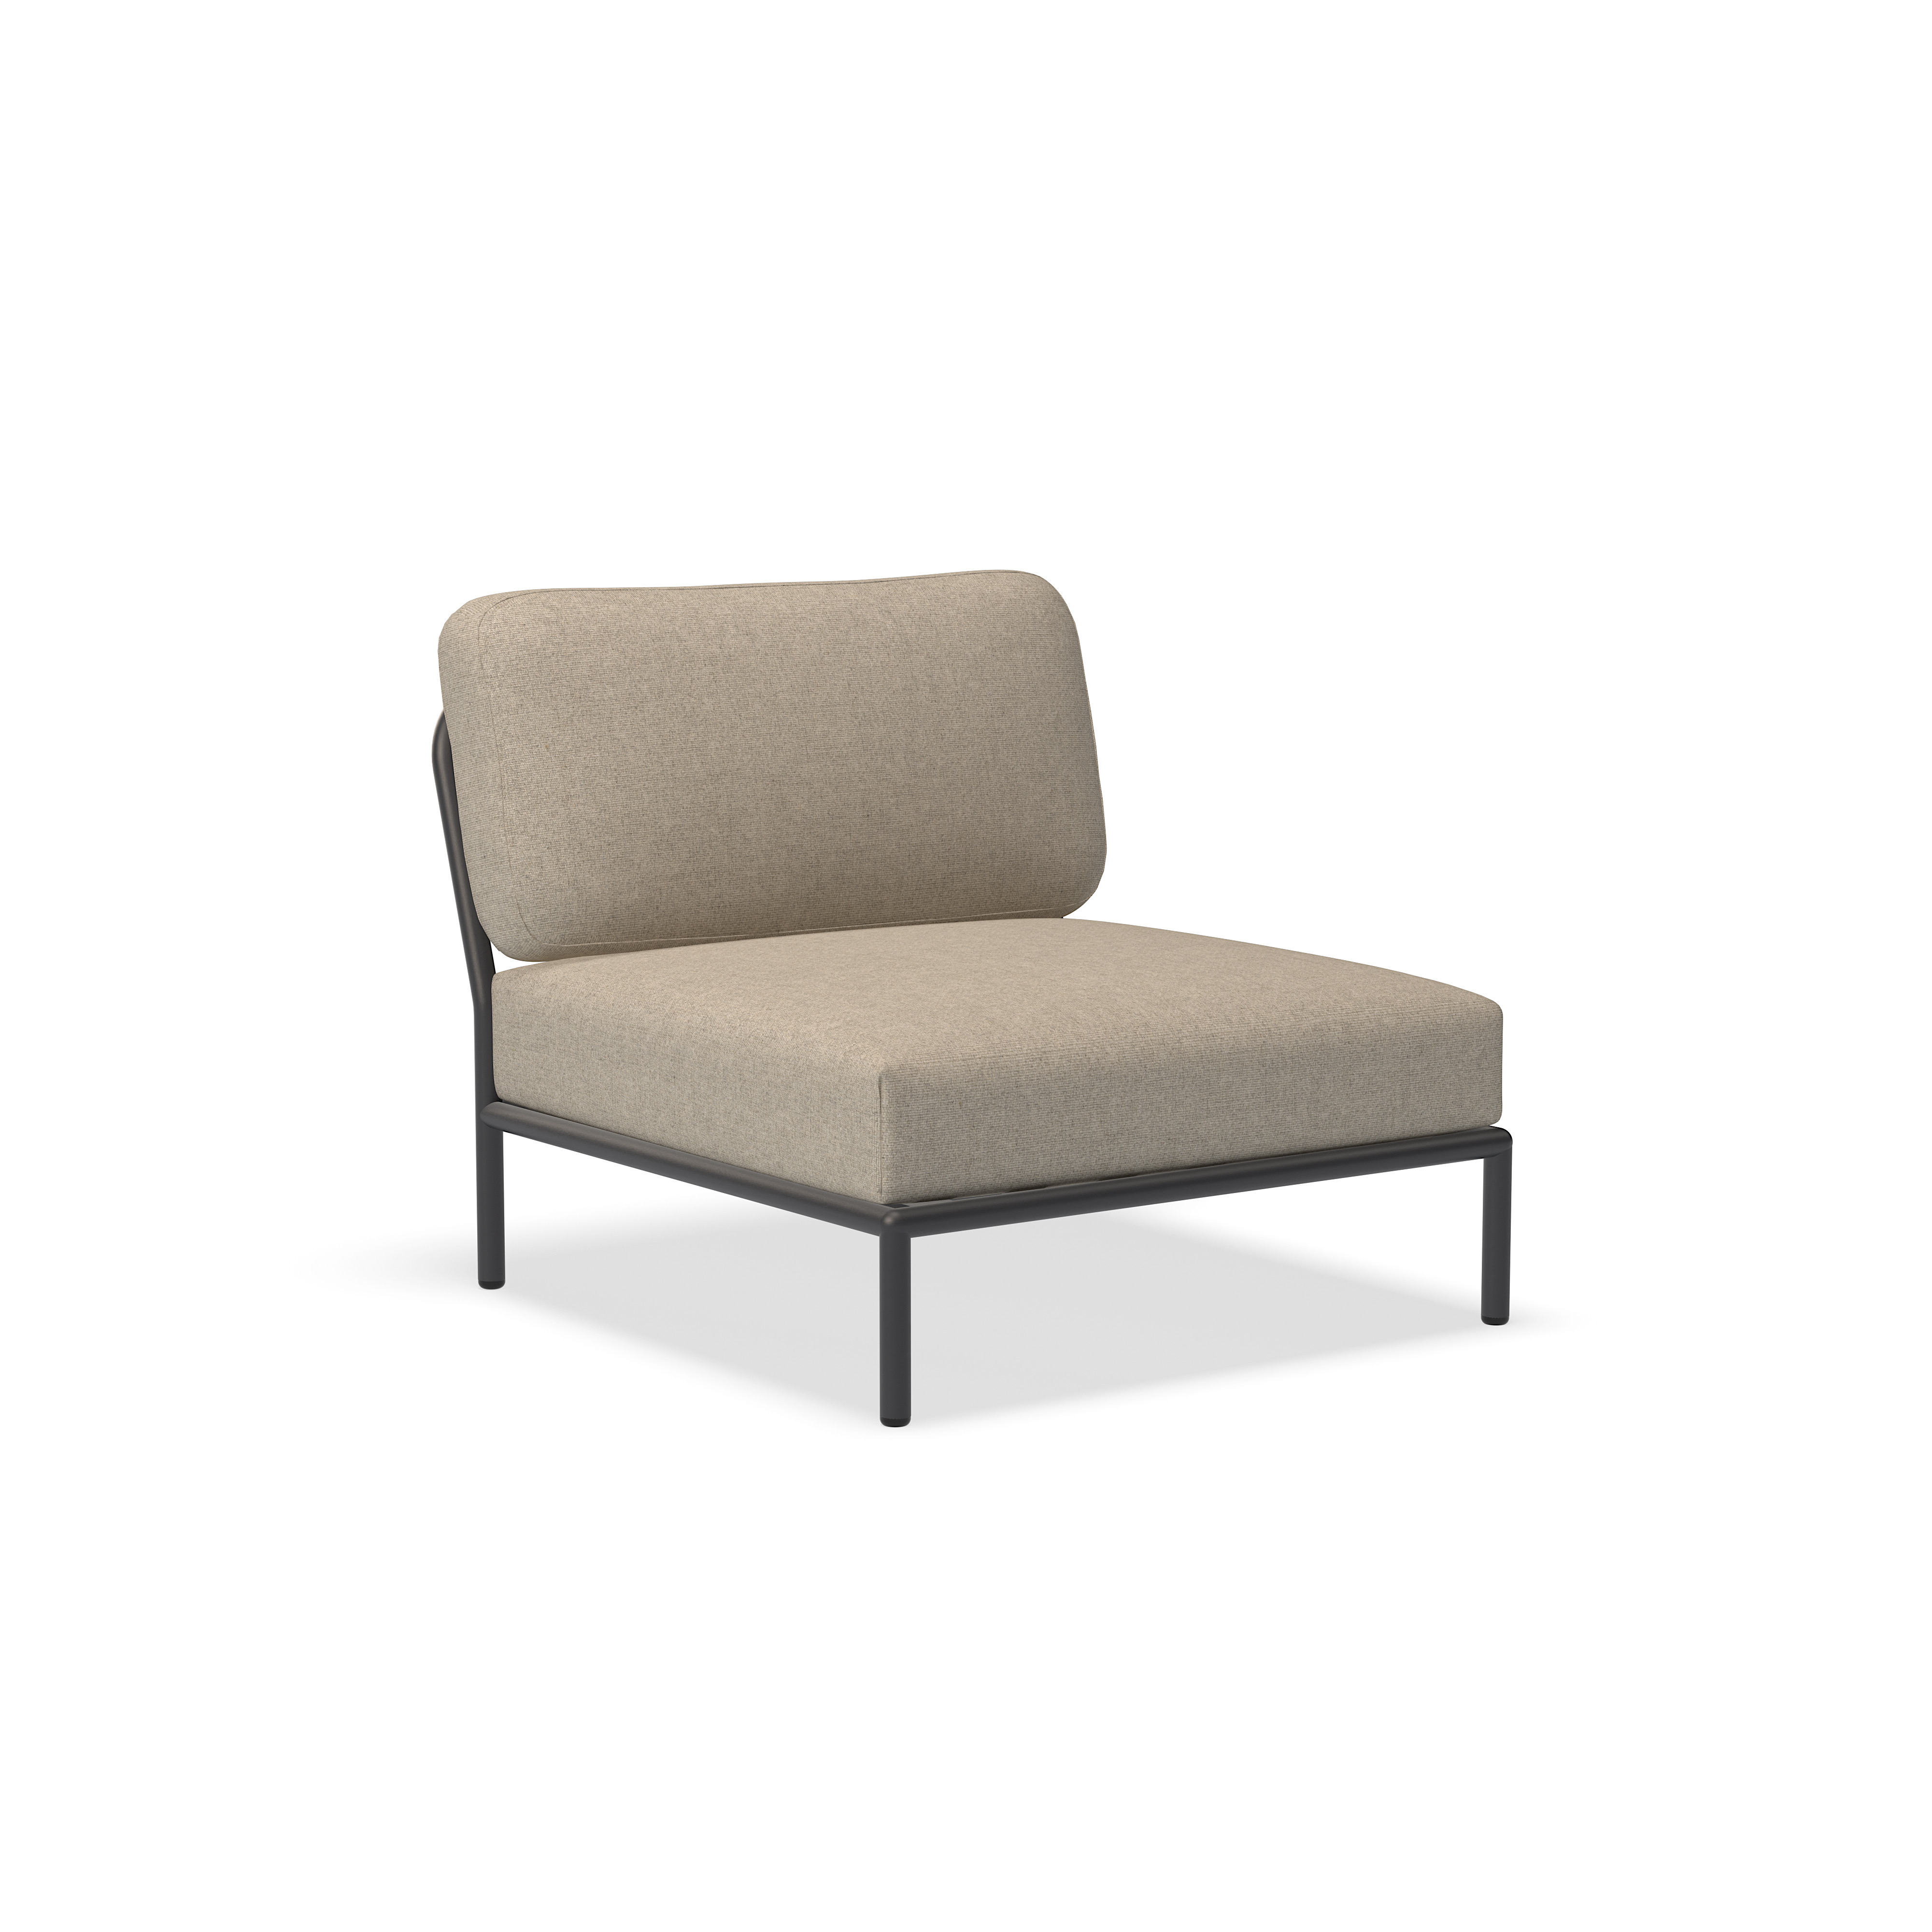 الكرسي - 12205-9551 - كرسي ، ورق البردي (HERITAGE) ، هيكل رمادي غامق